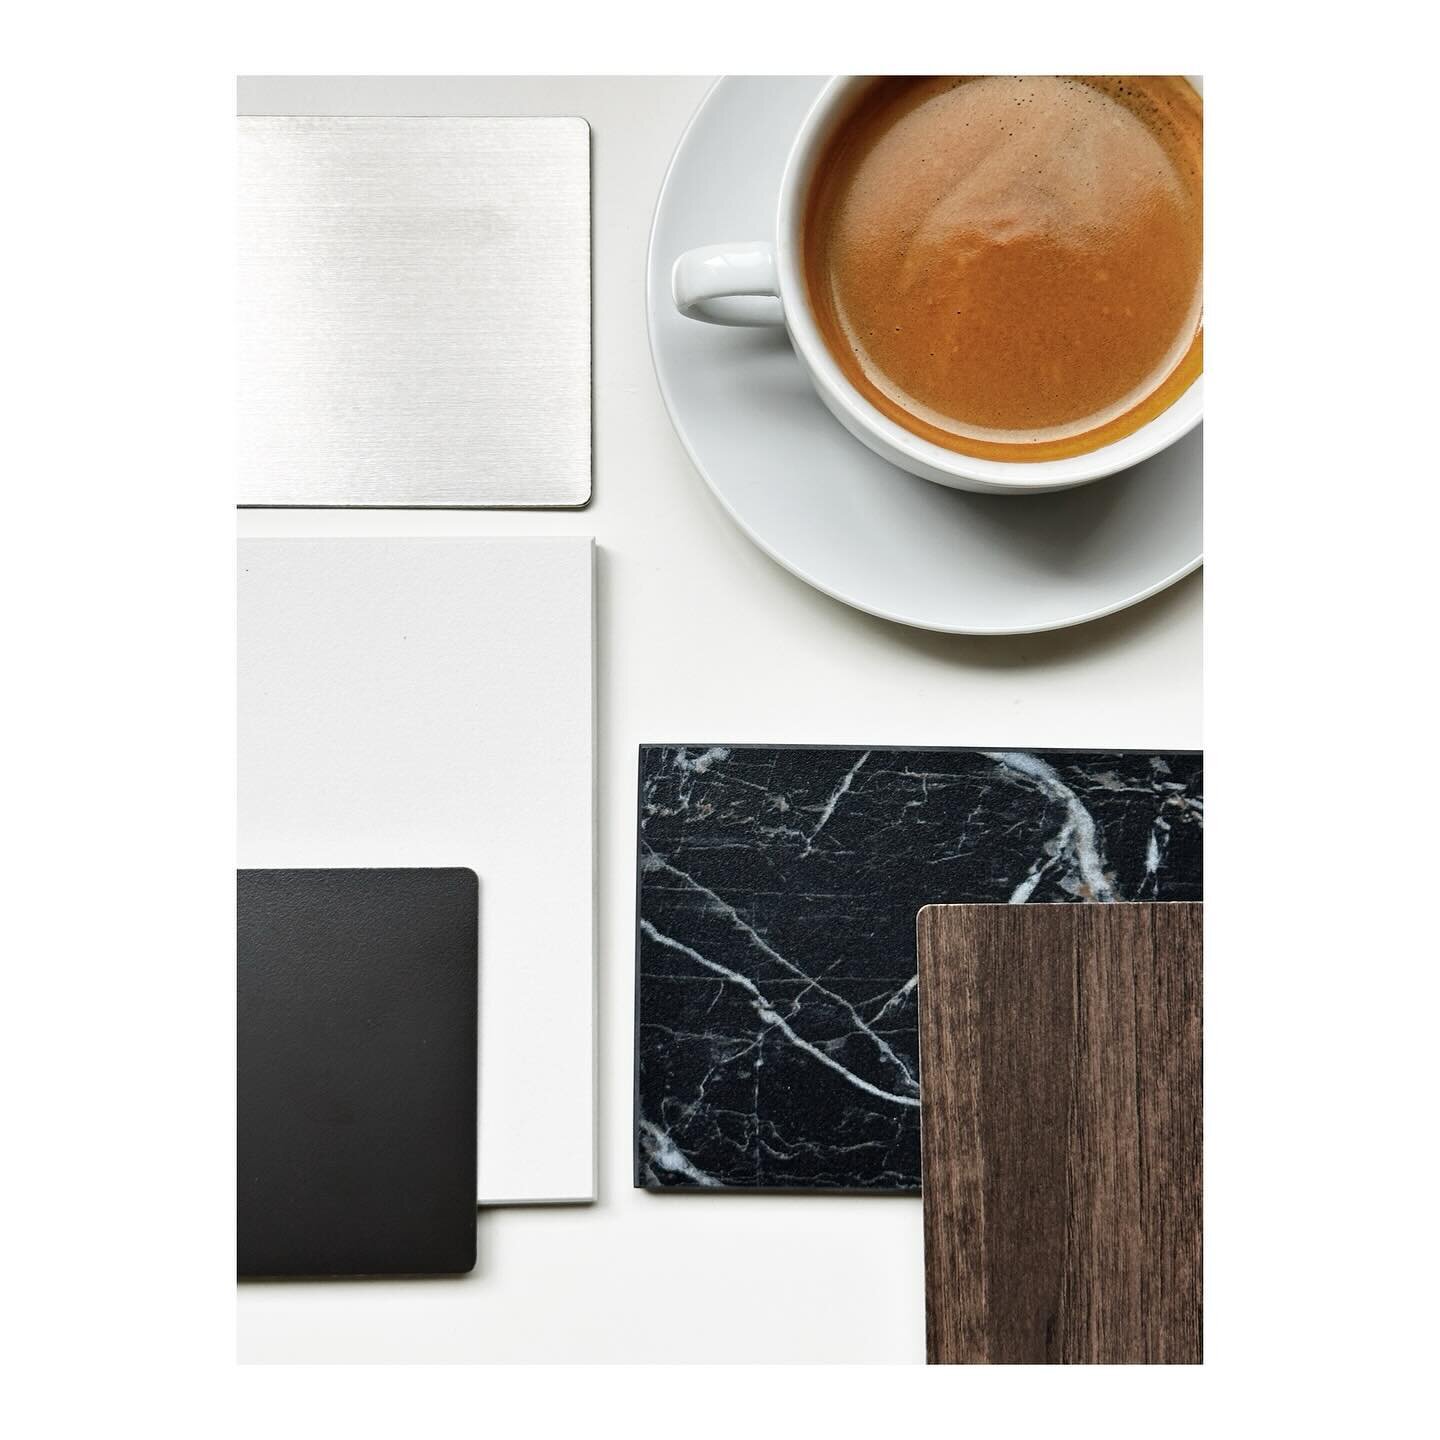 Monday coffee + Materials.
.
.
#kitchendesign